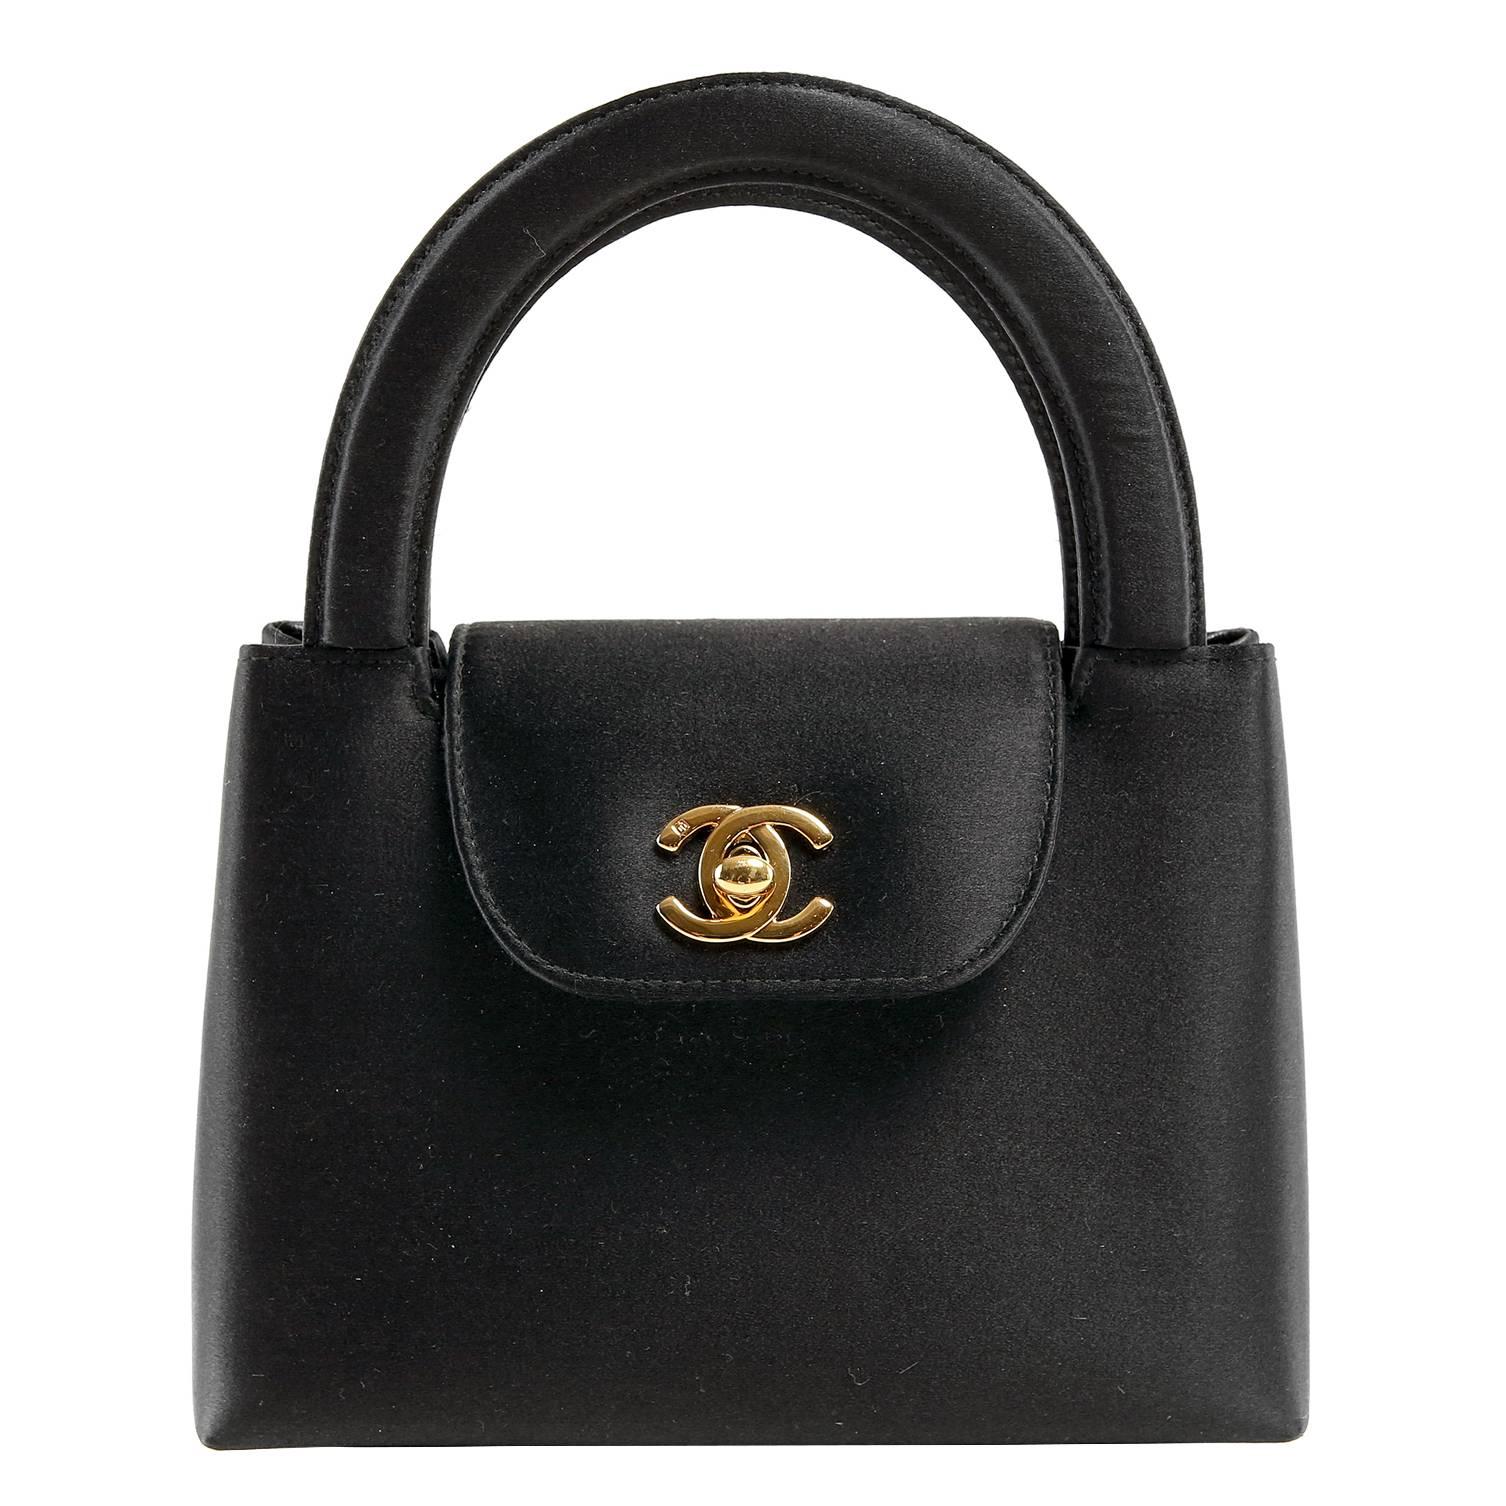 Chanel Black Satin Evening Bag